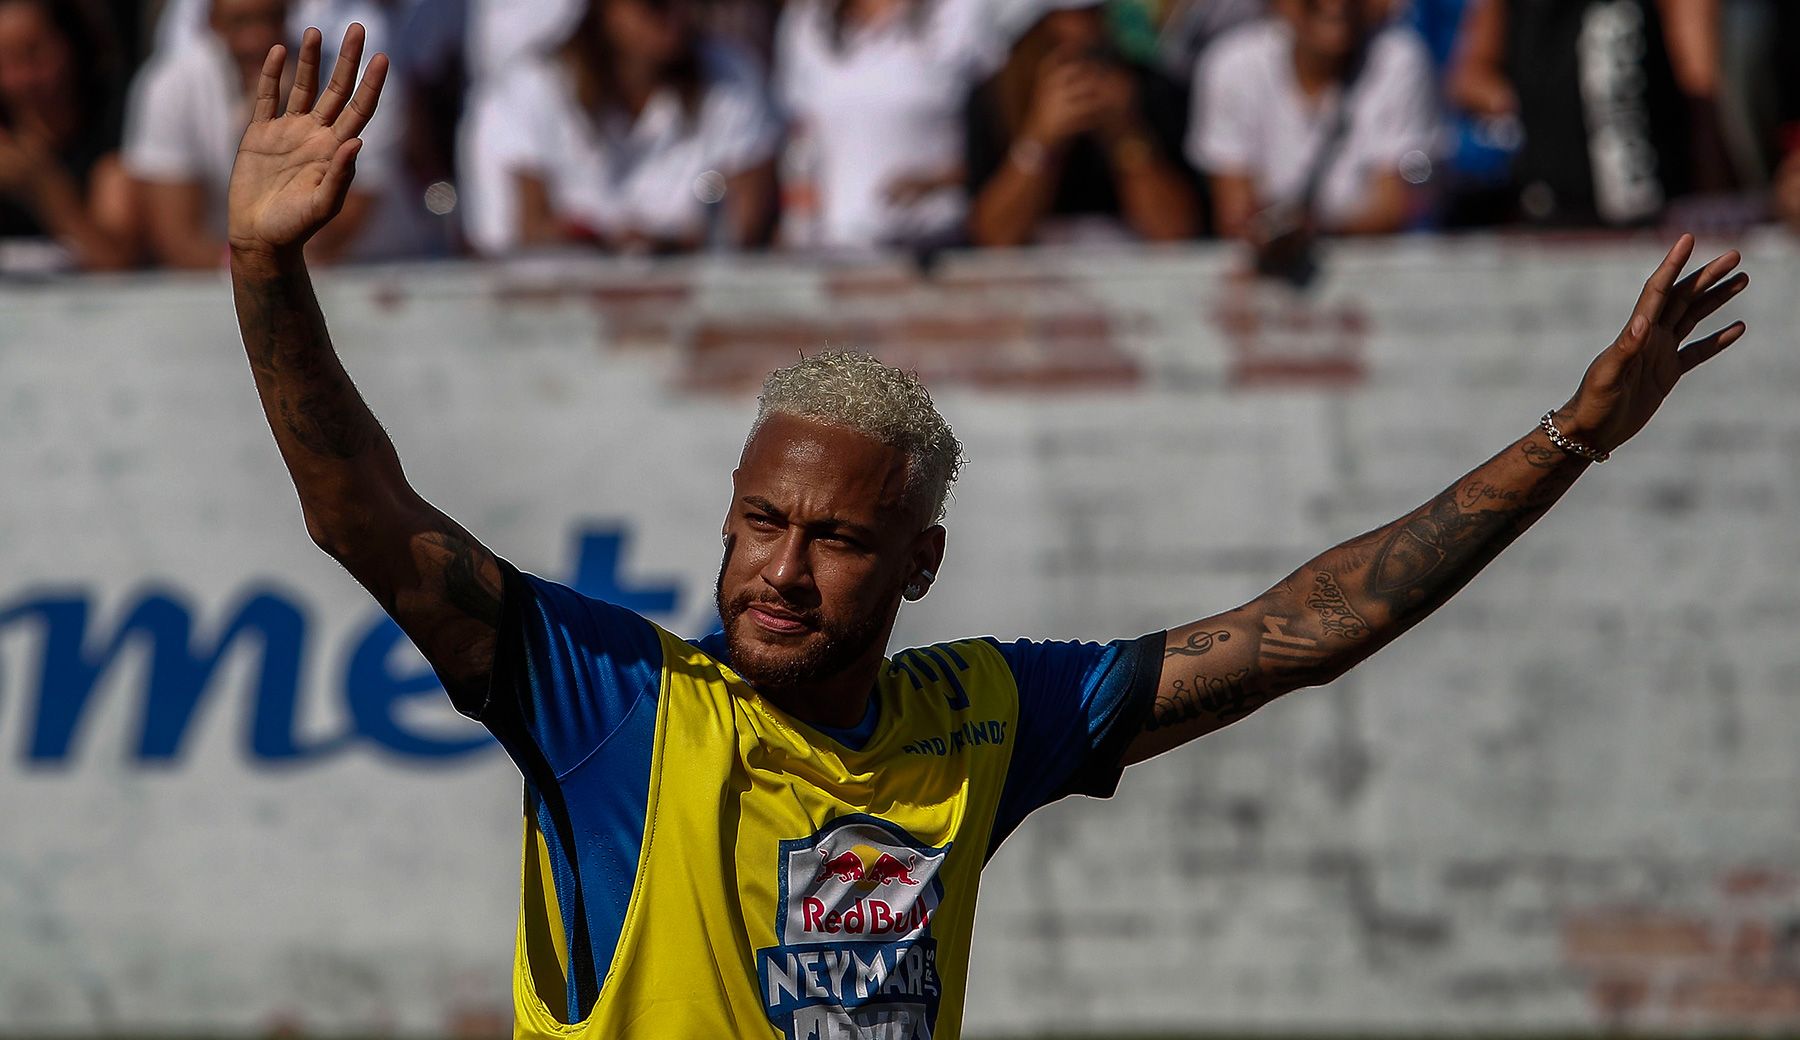 Neymar in an exhibition match in Brazil